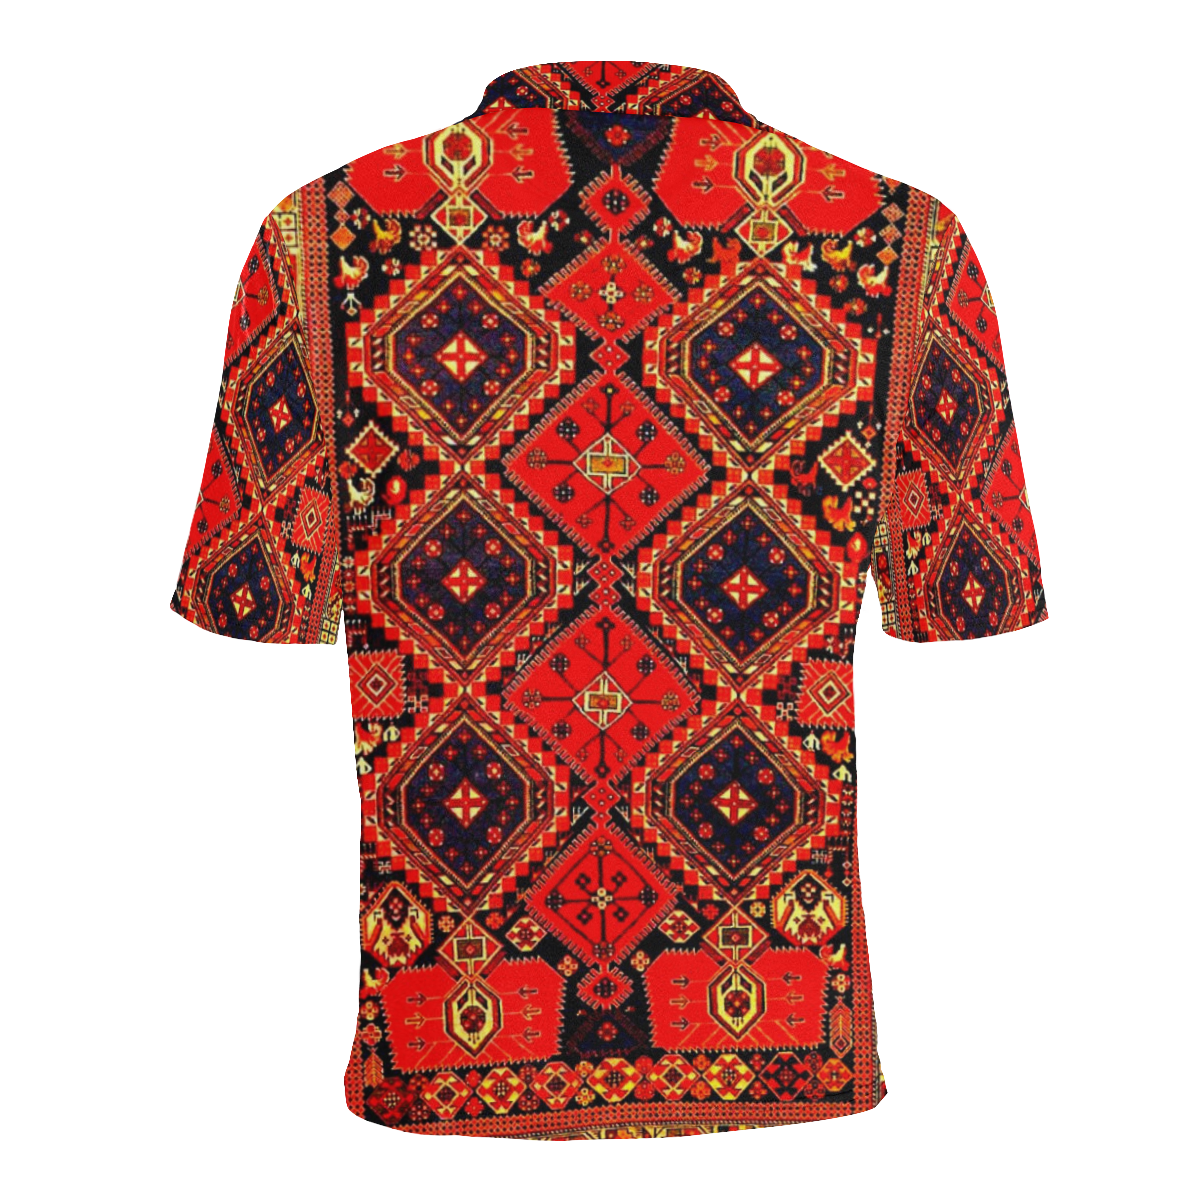 Azerbaijan Pattern 3 Men's All Over Print Polo Shirt (Model T55)